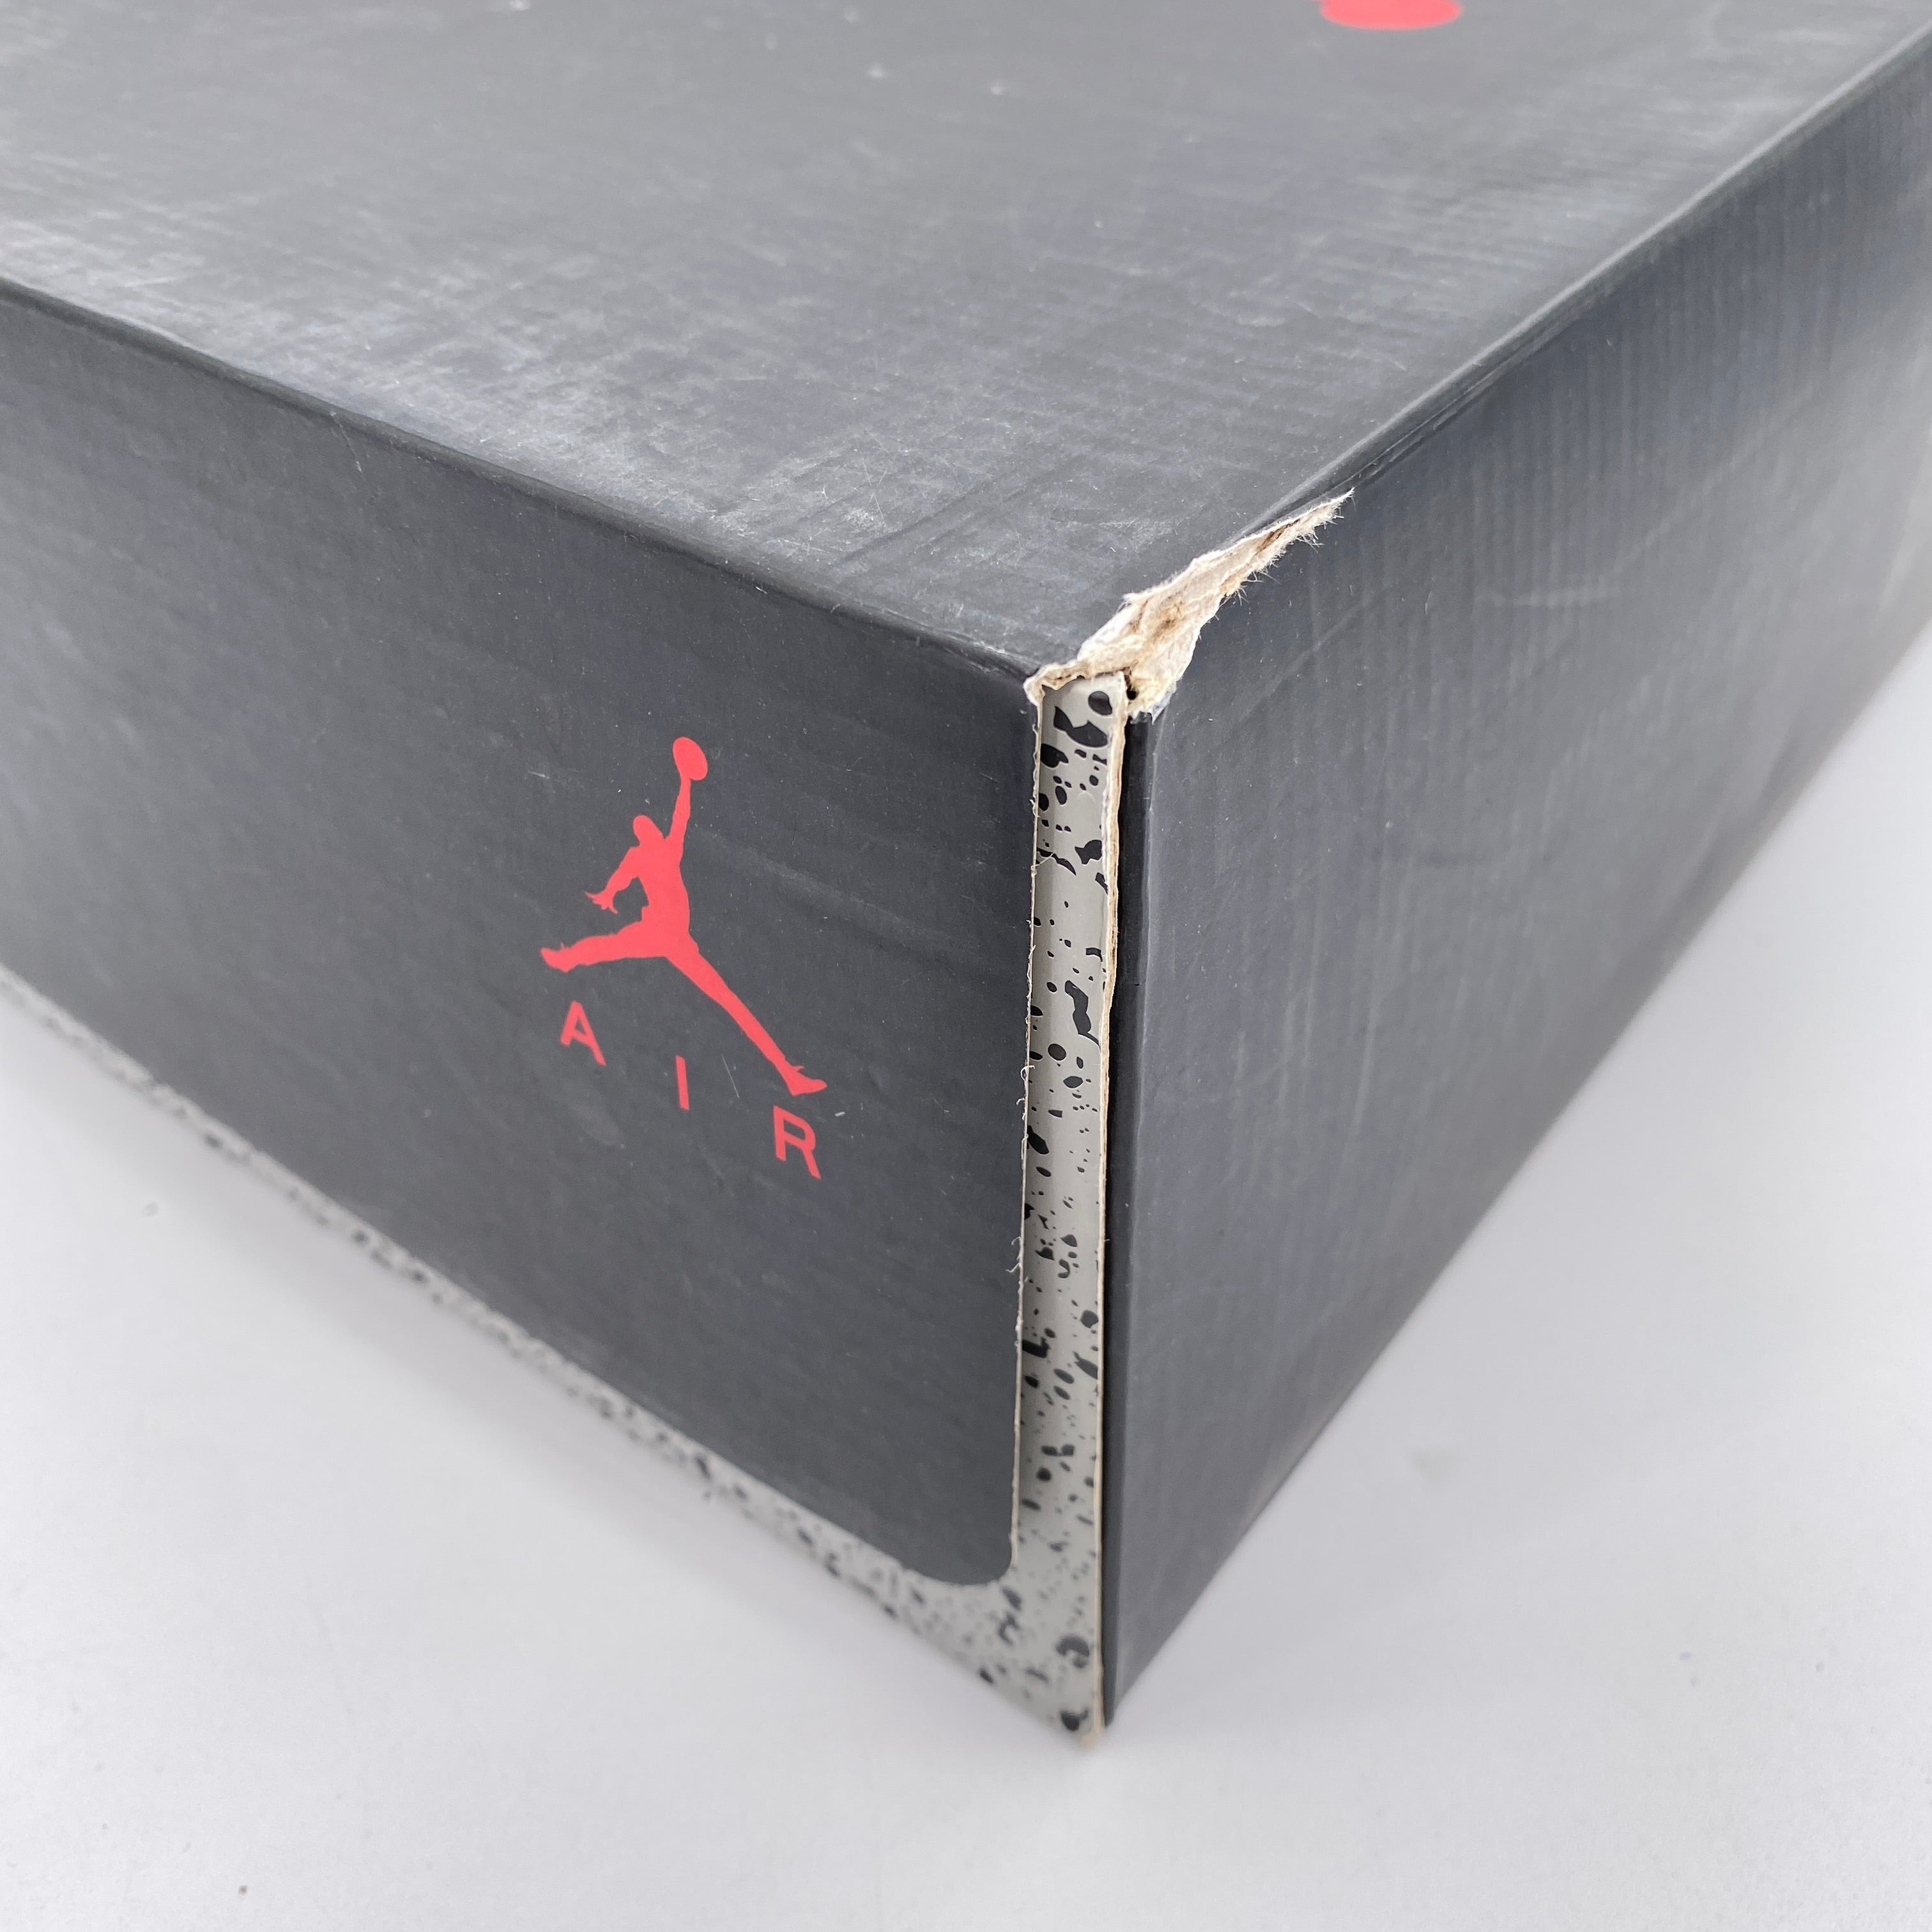 Air Jordan 5 Retro "Blue Suede" 2017 New (Cond) Size 10.5